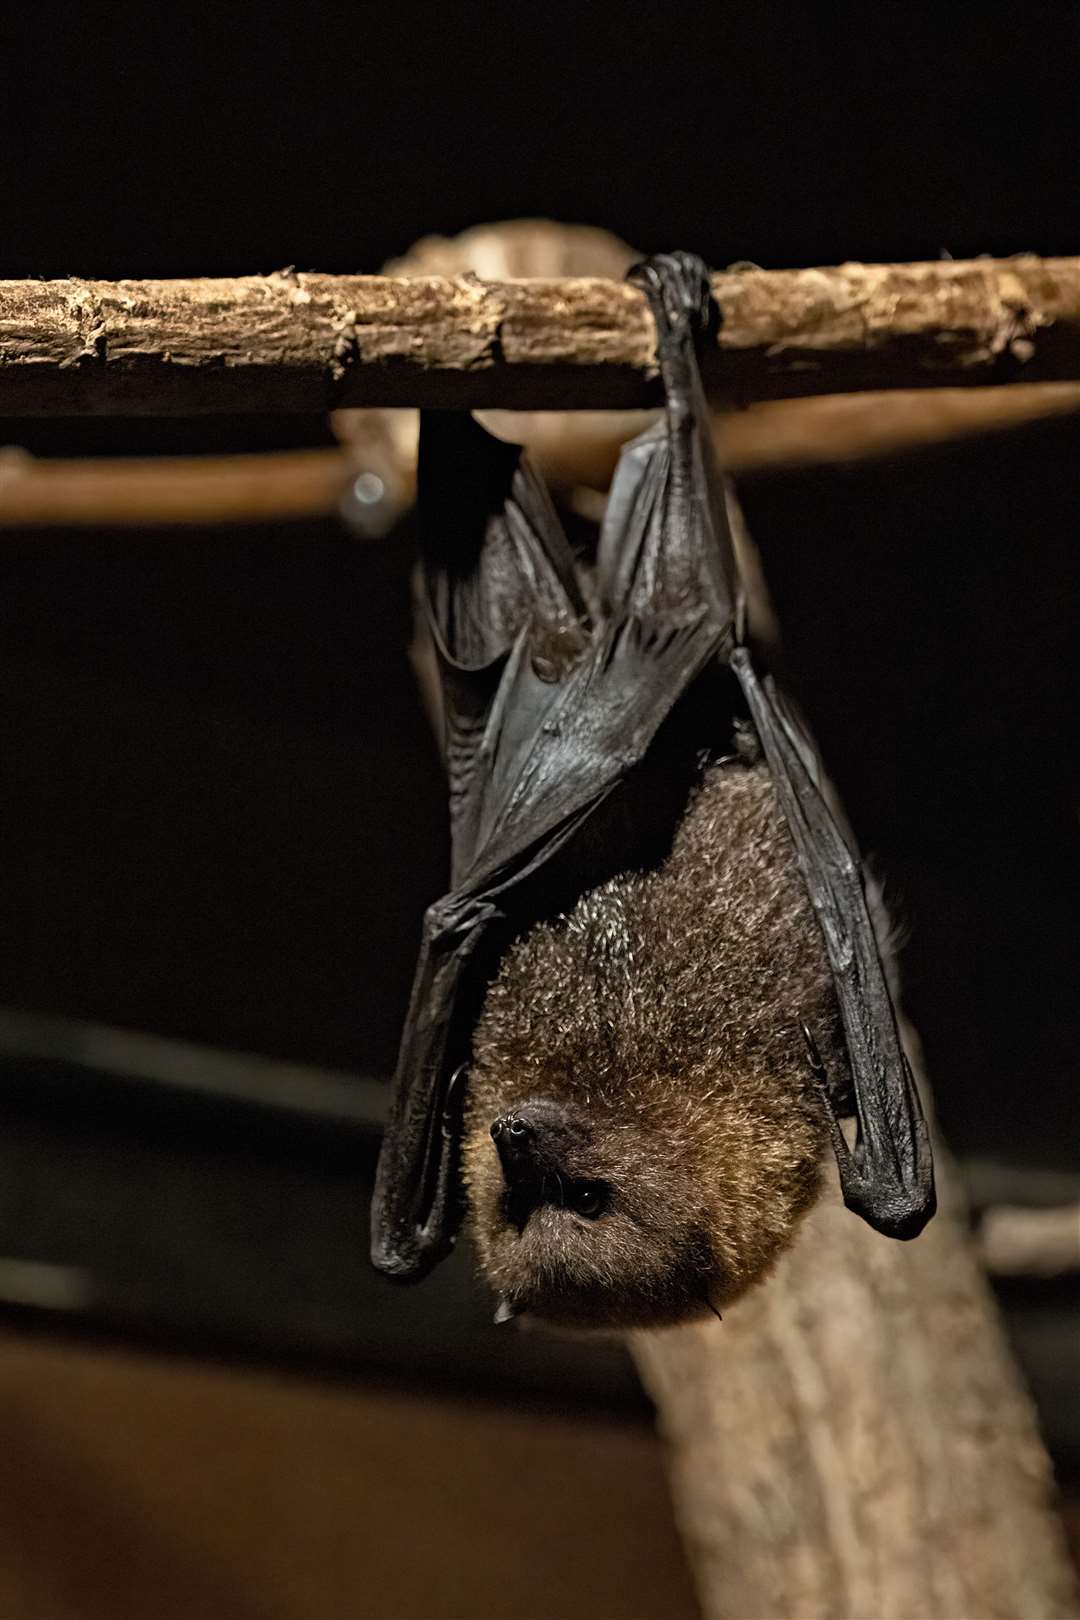 Bats are widespread across the globe.